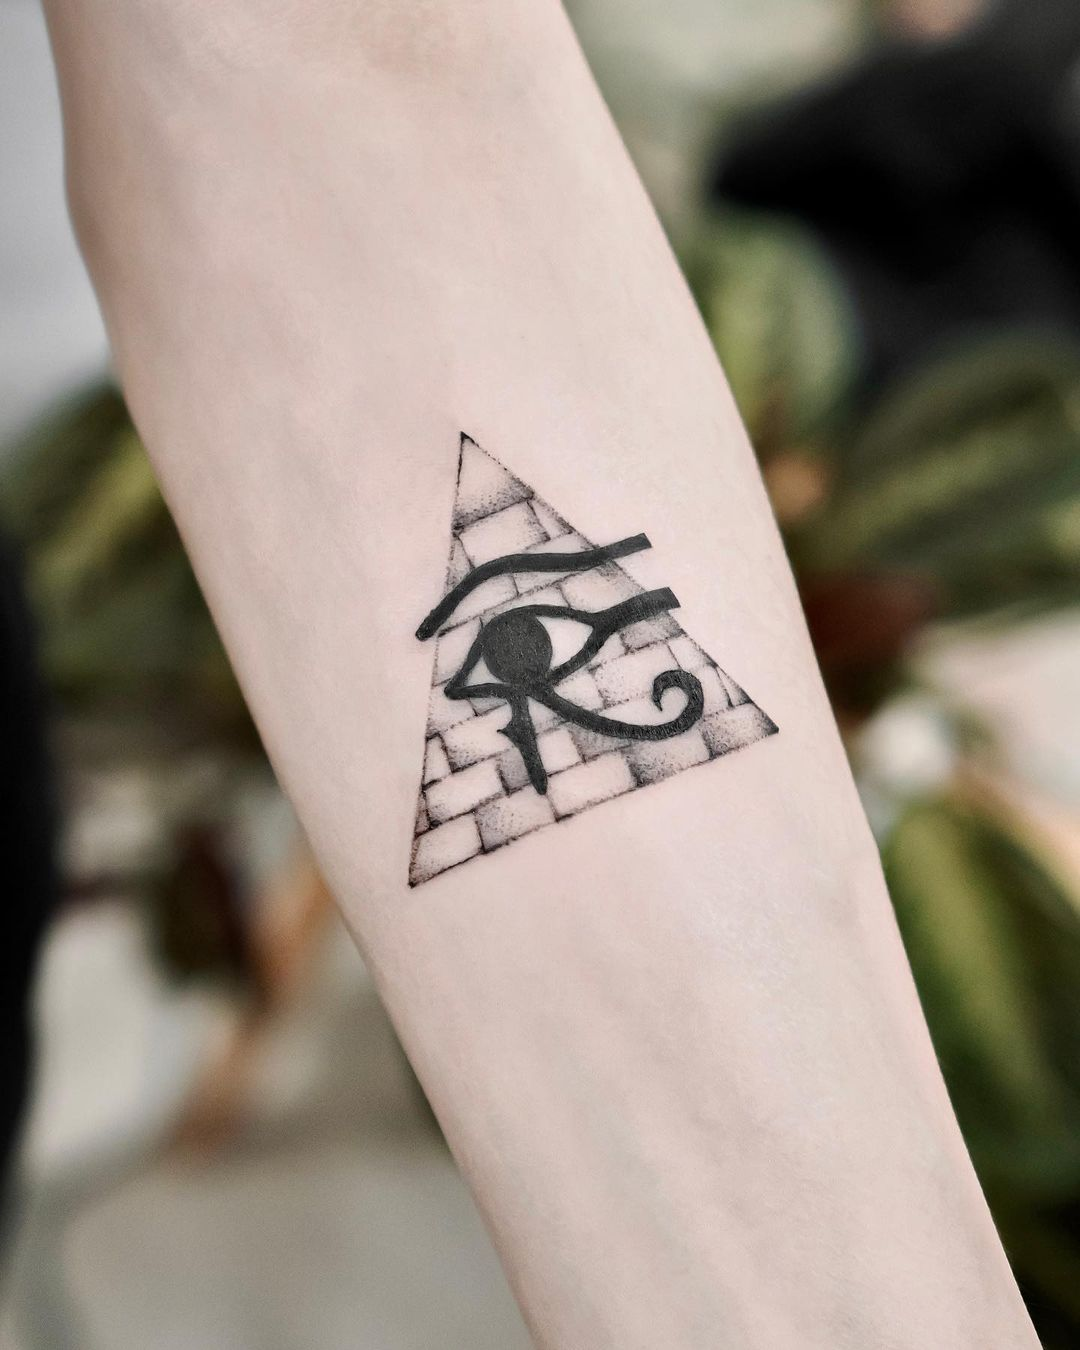 50 Inspirational Eye of Horus Tattoo Ideas